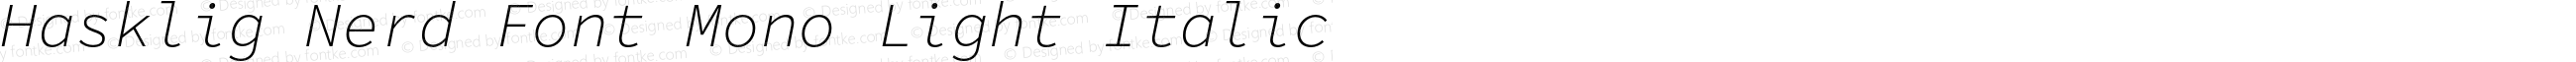 Hasklig Light Italic Nerd Font Complete Mono